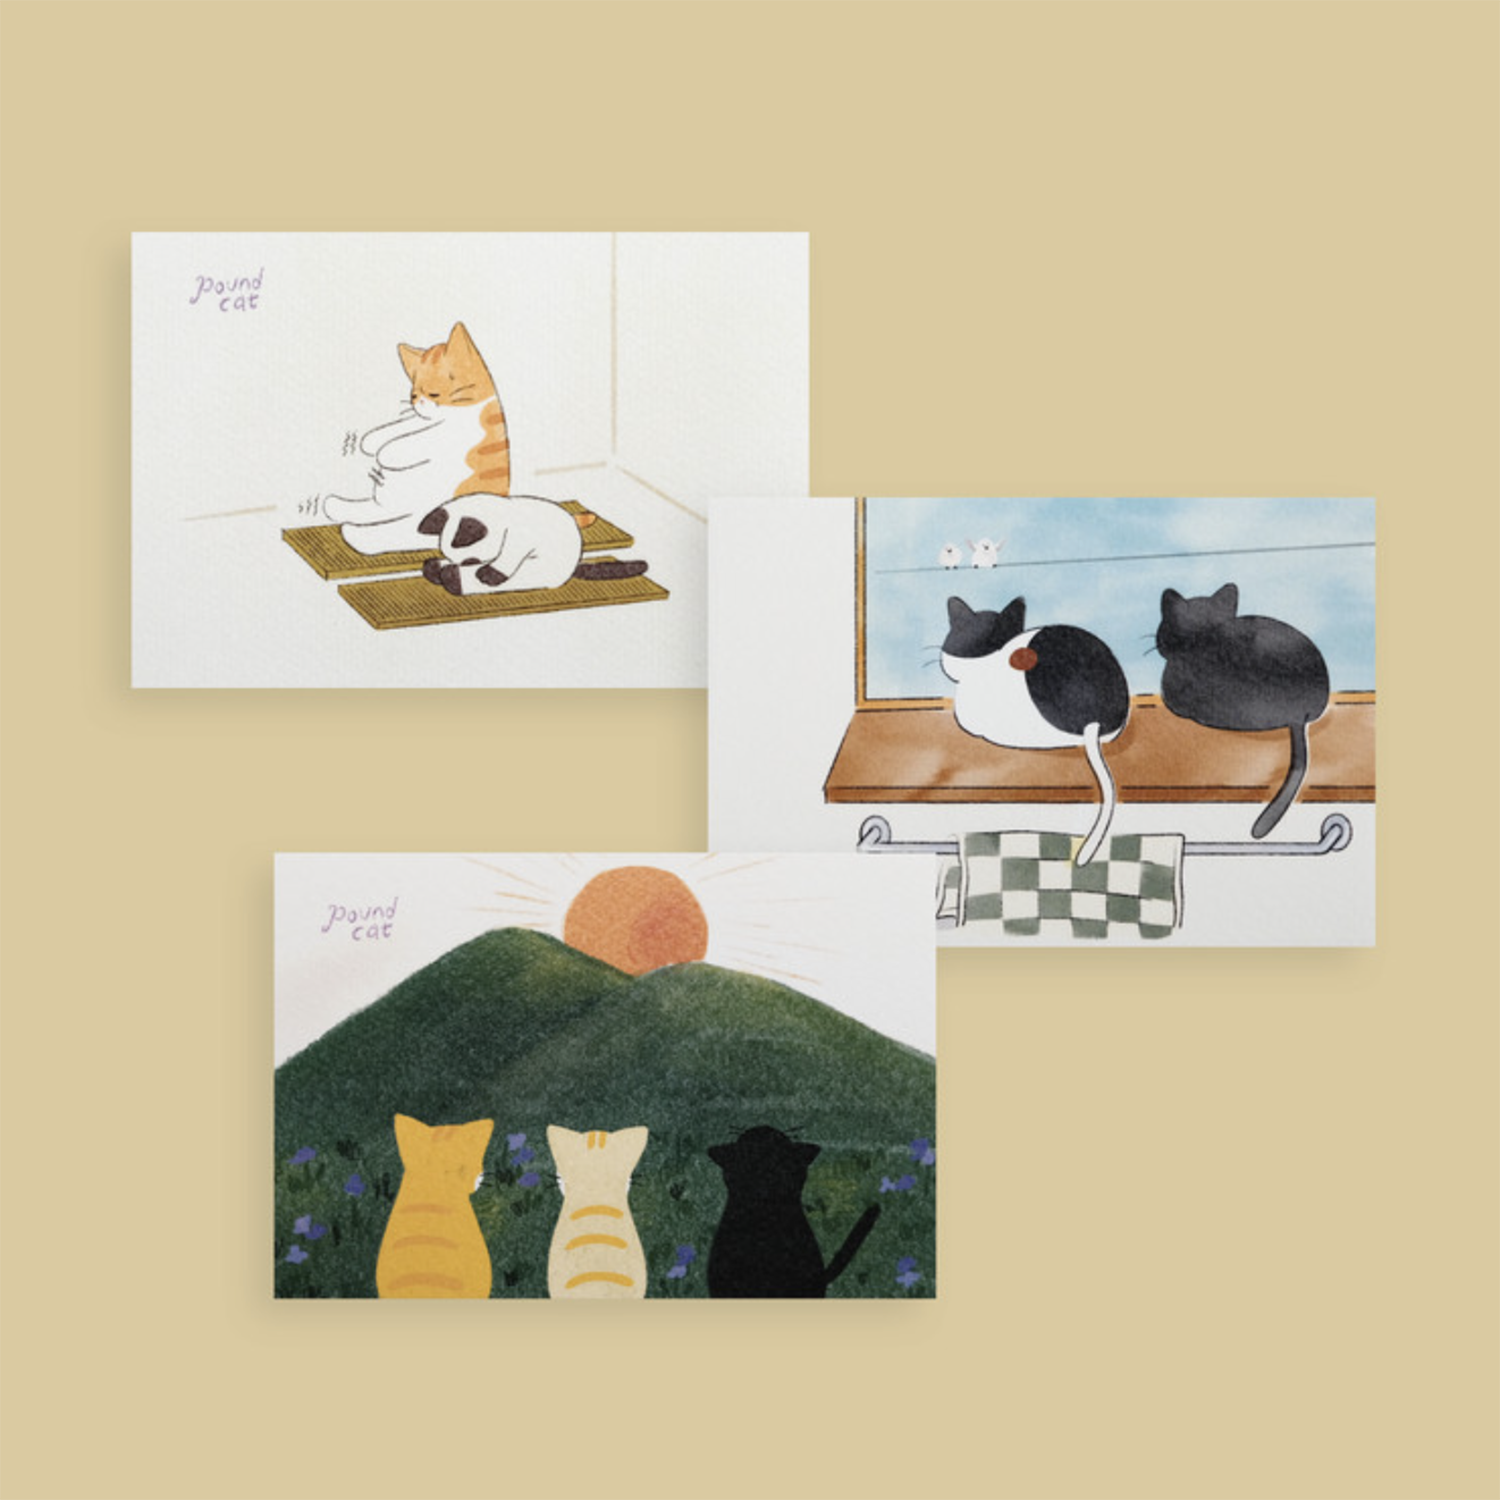 Poundcat hand drawing postcard